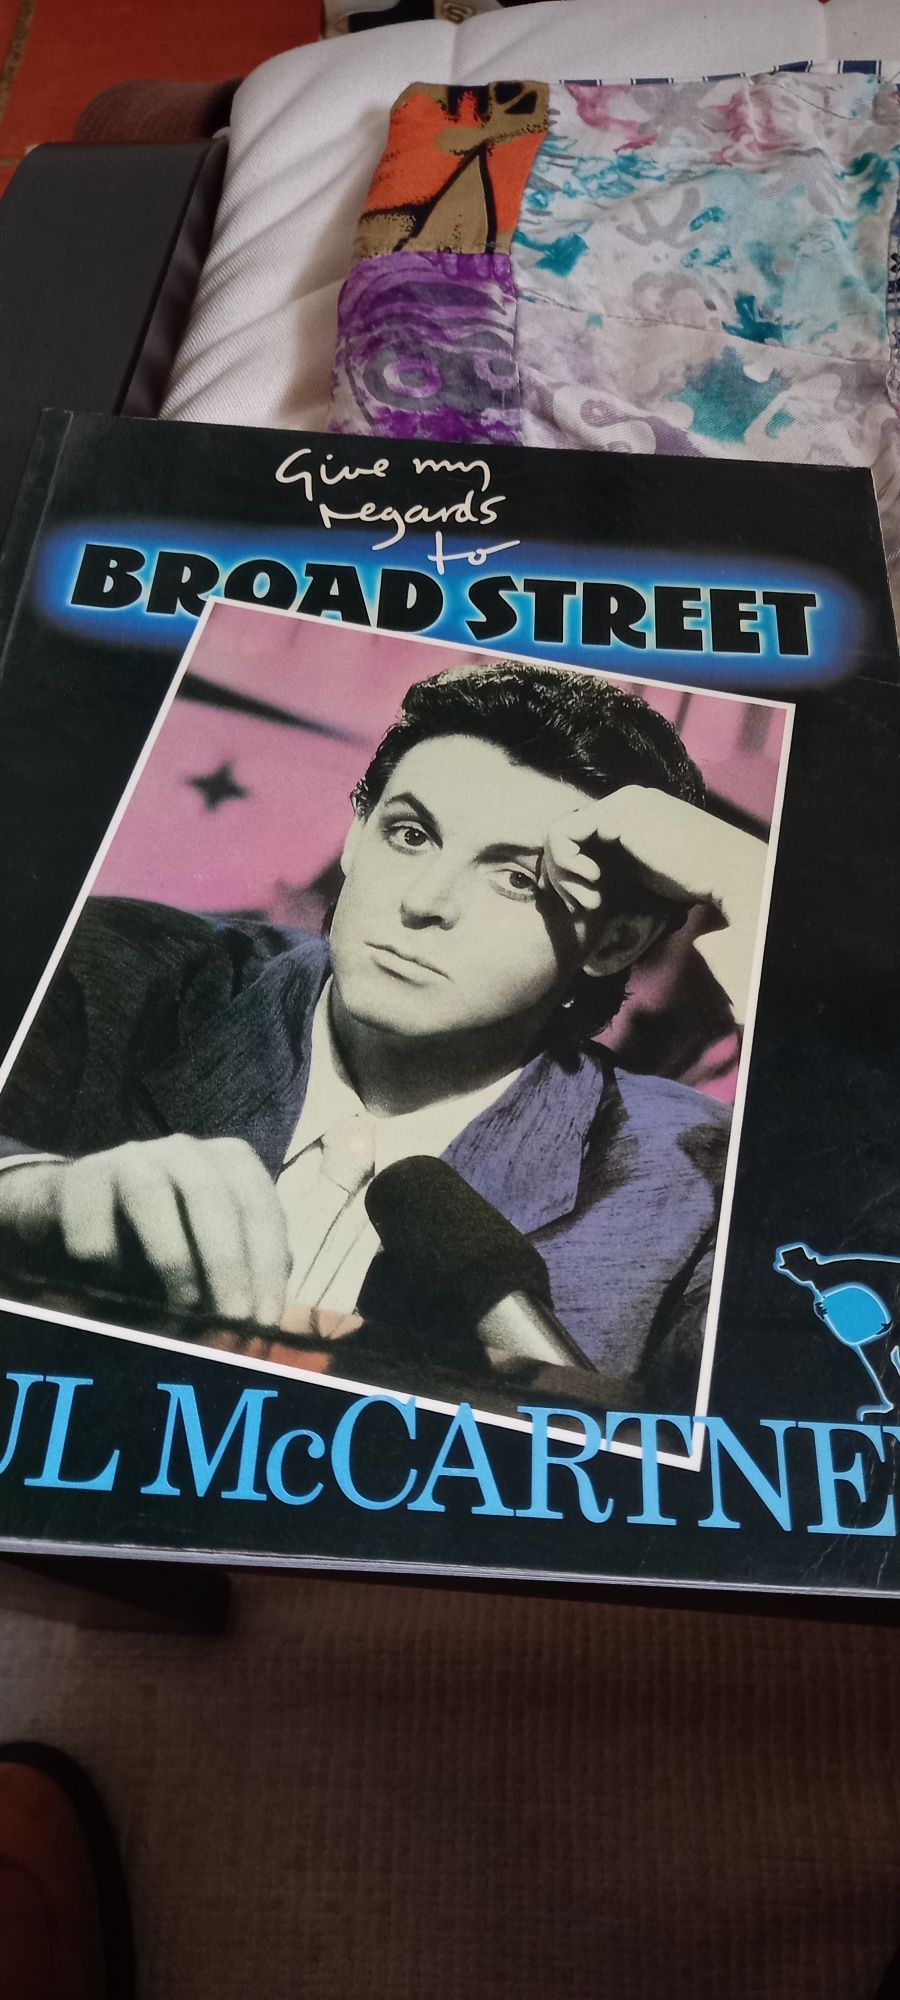 Paul McCartney - Give my regards to Broad street, livro